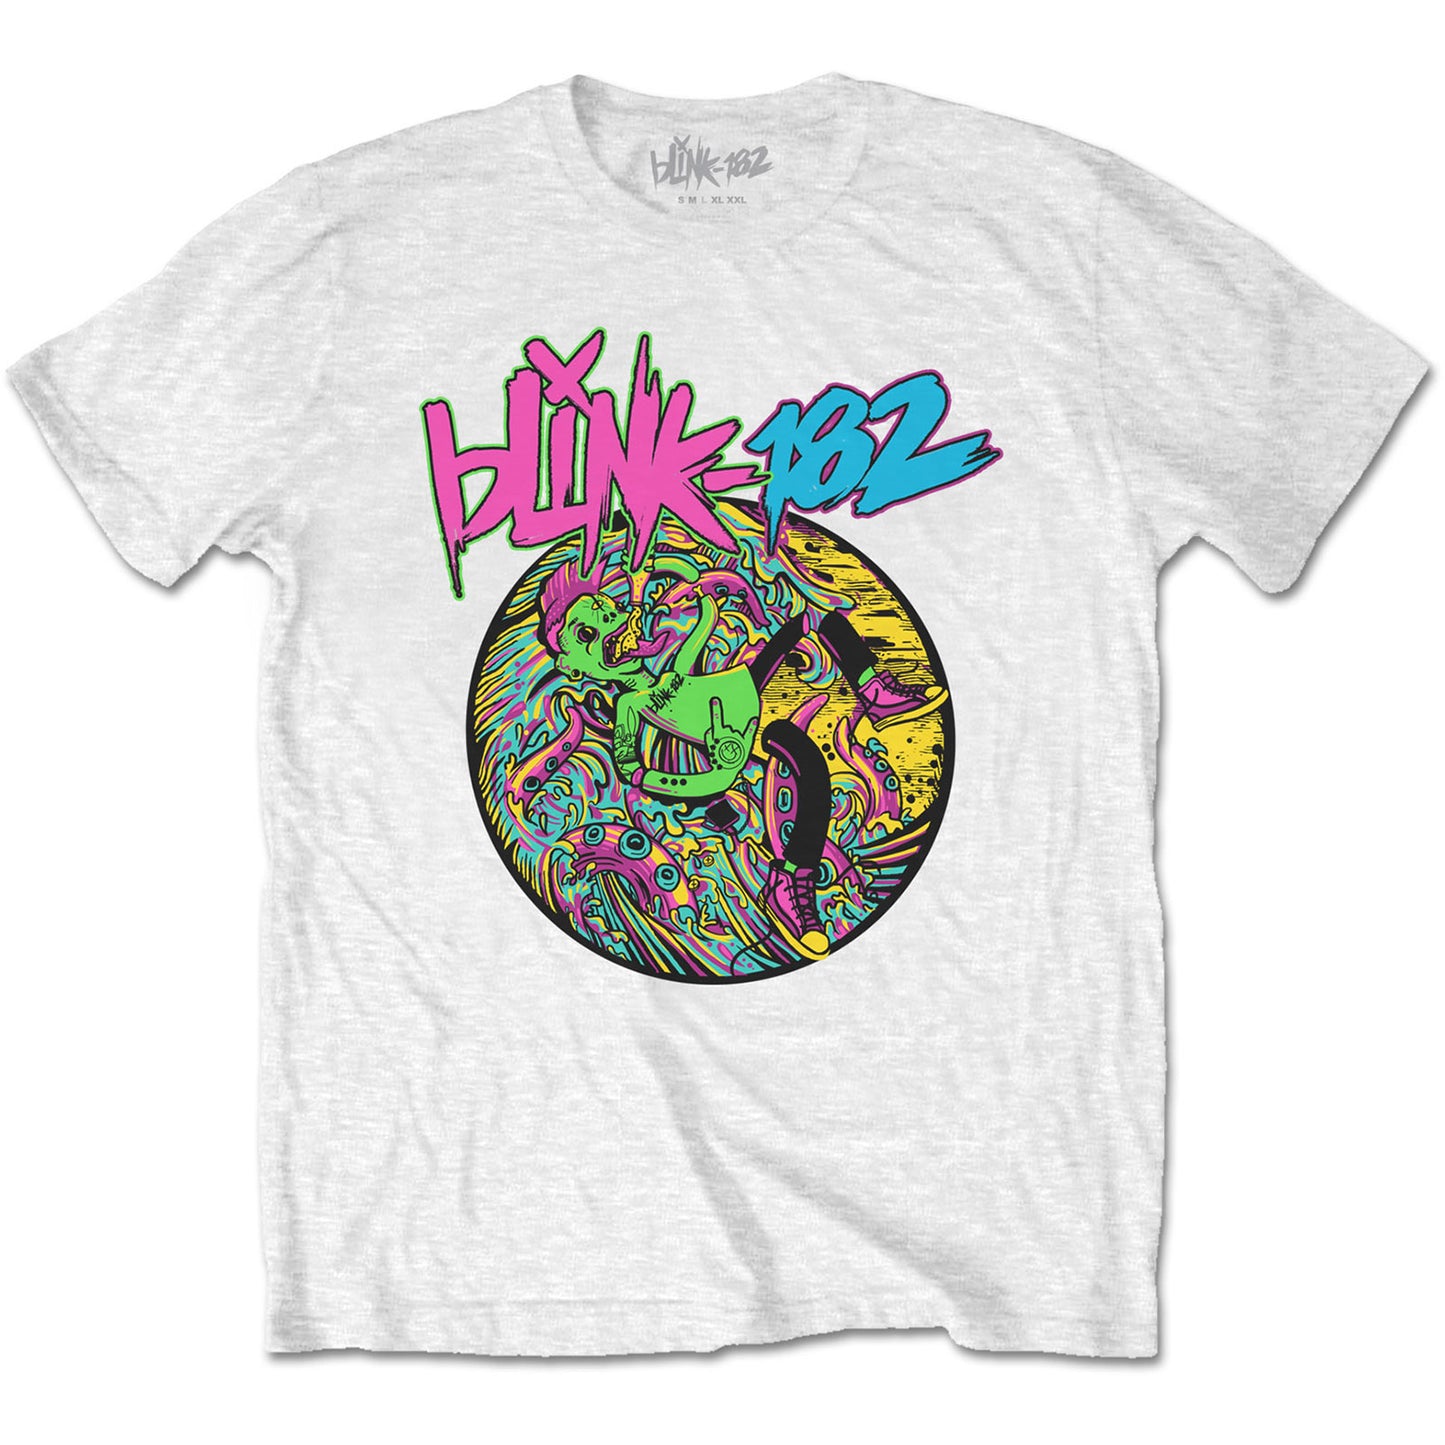 Blink-182 Shirt: Overboard Event